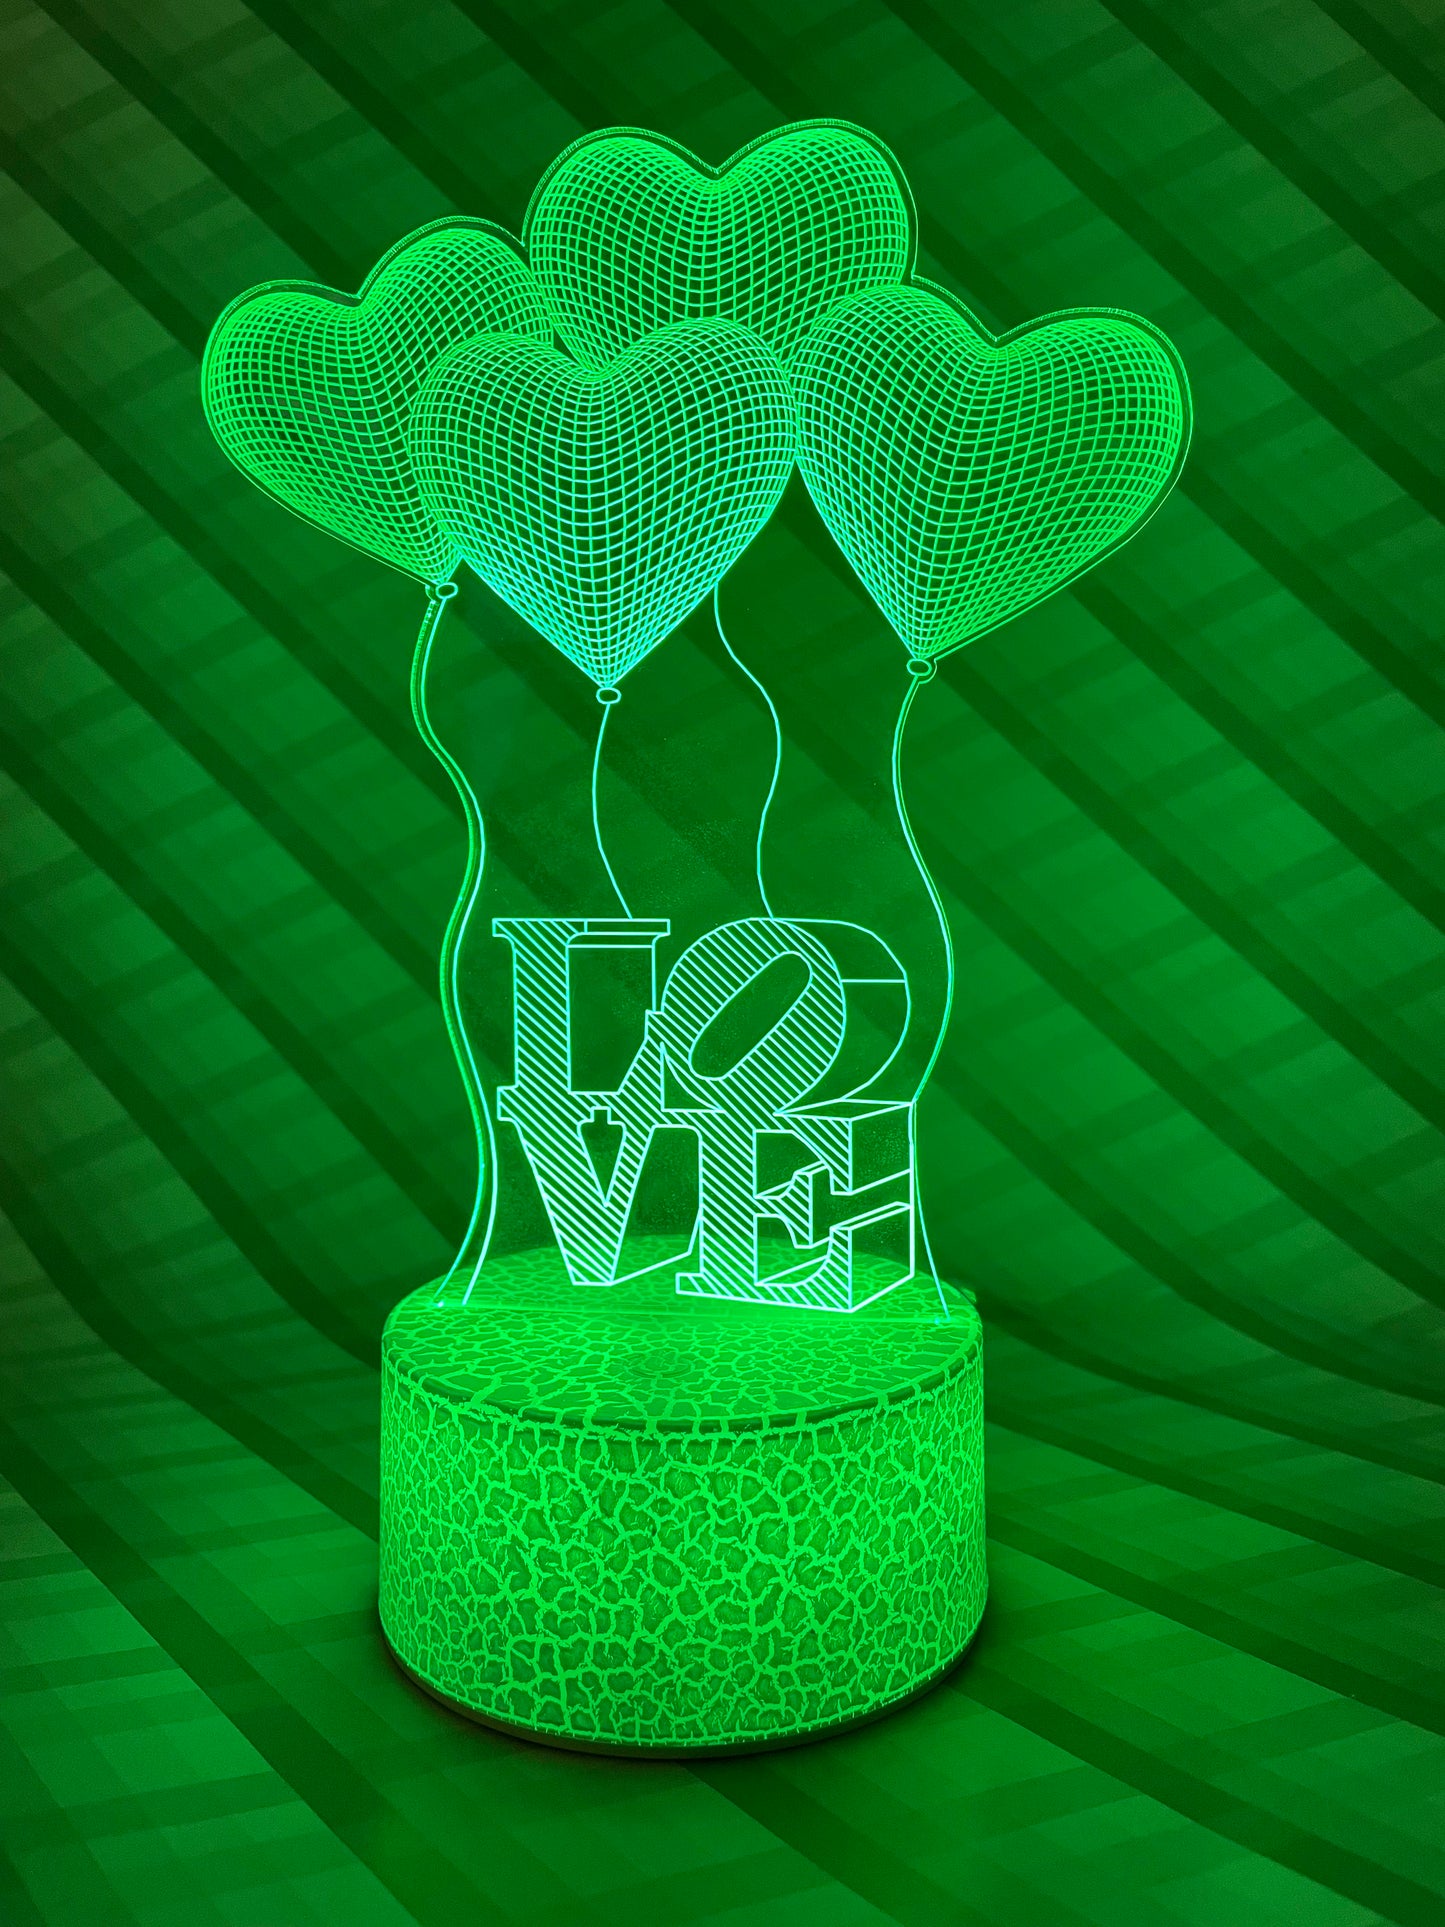 Multi LOVE HEARTS 3D (NIGHT LIGHT)